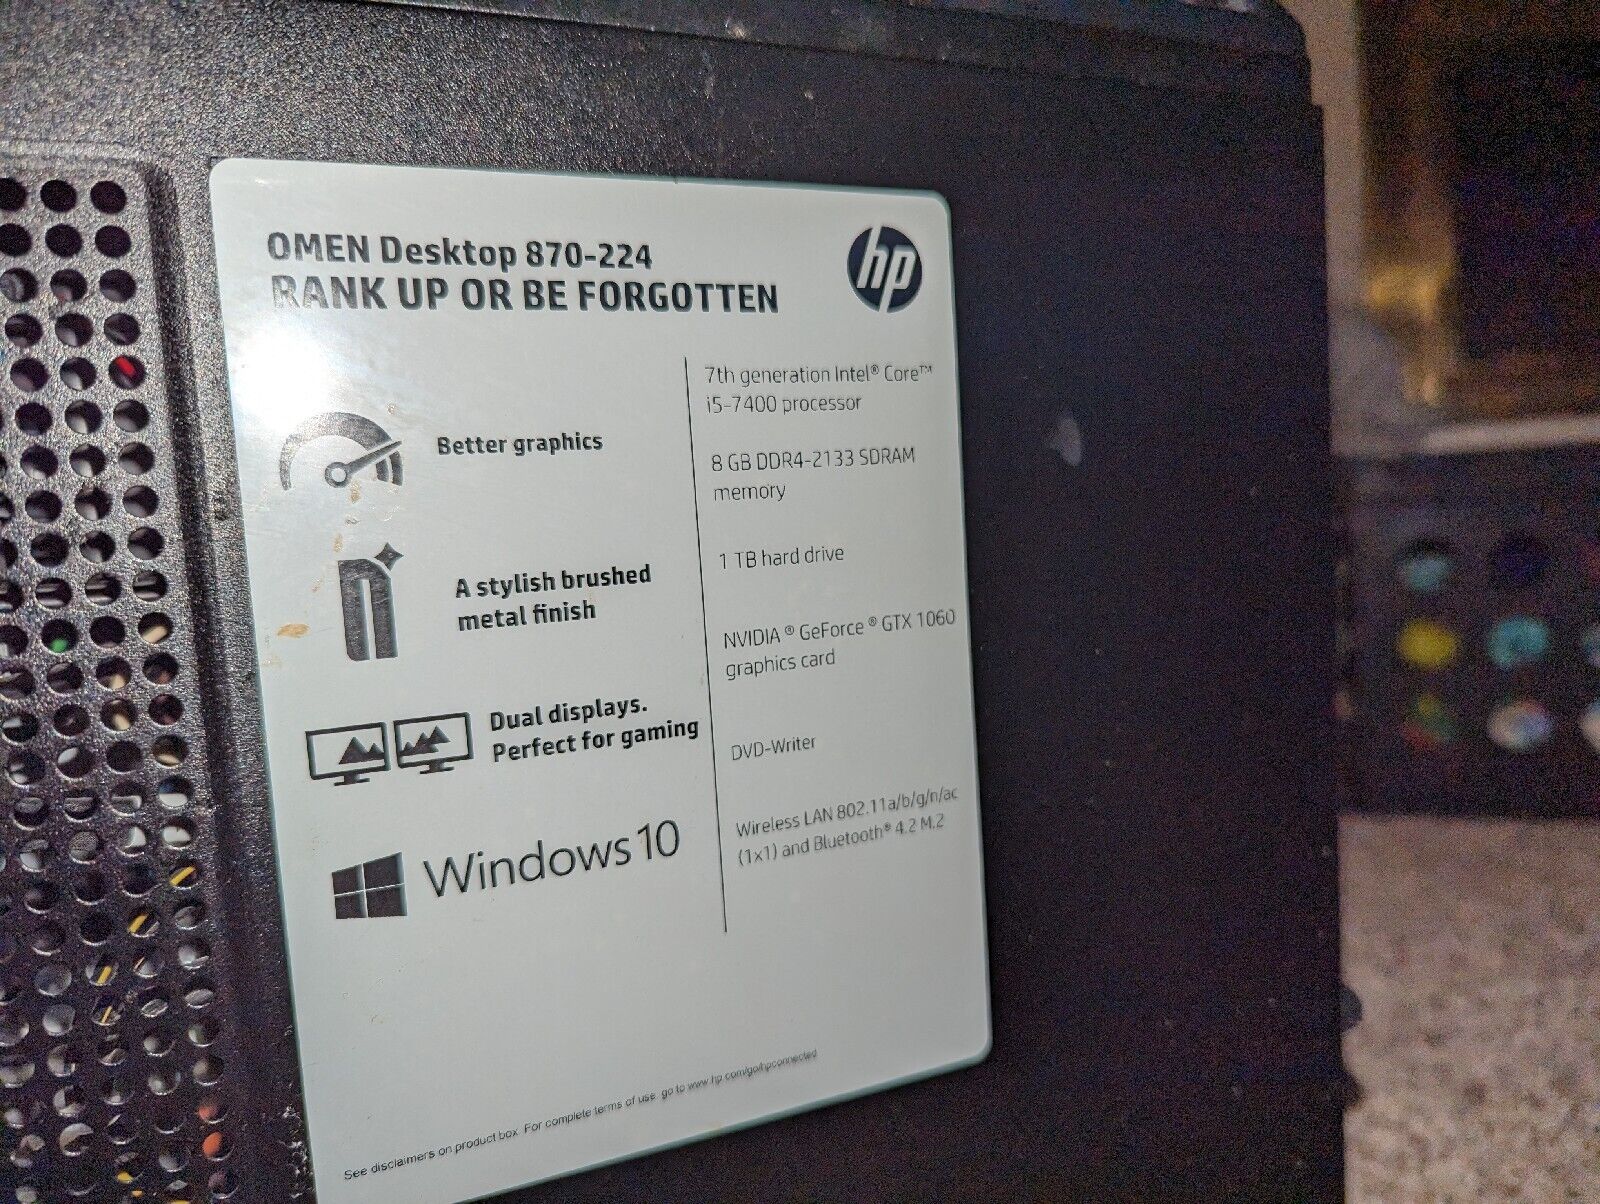 HP OMEN 870-213w (1TB+256GB, Intel Core i7 7th Gen., 3.60GHz,16GB) Tower Desktop